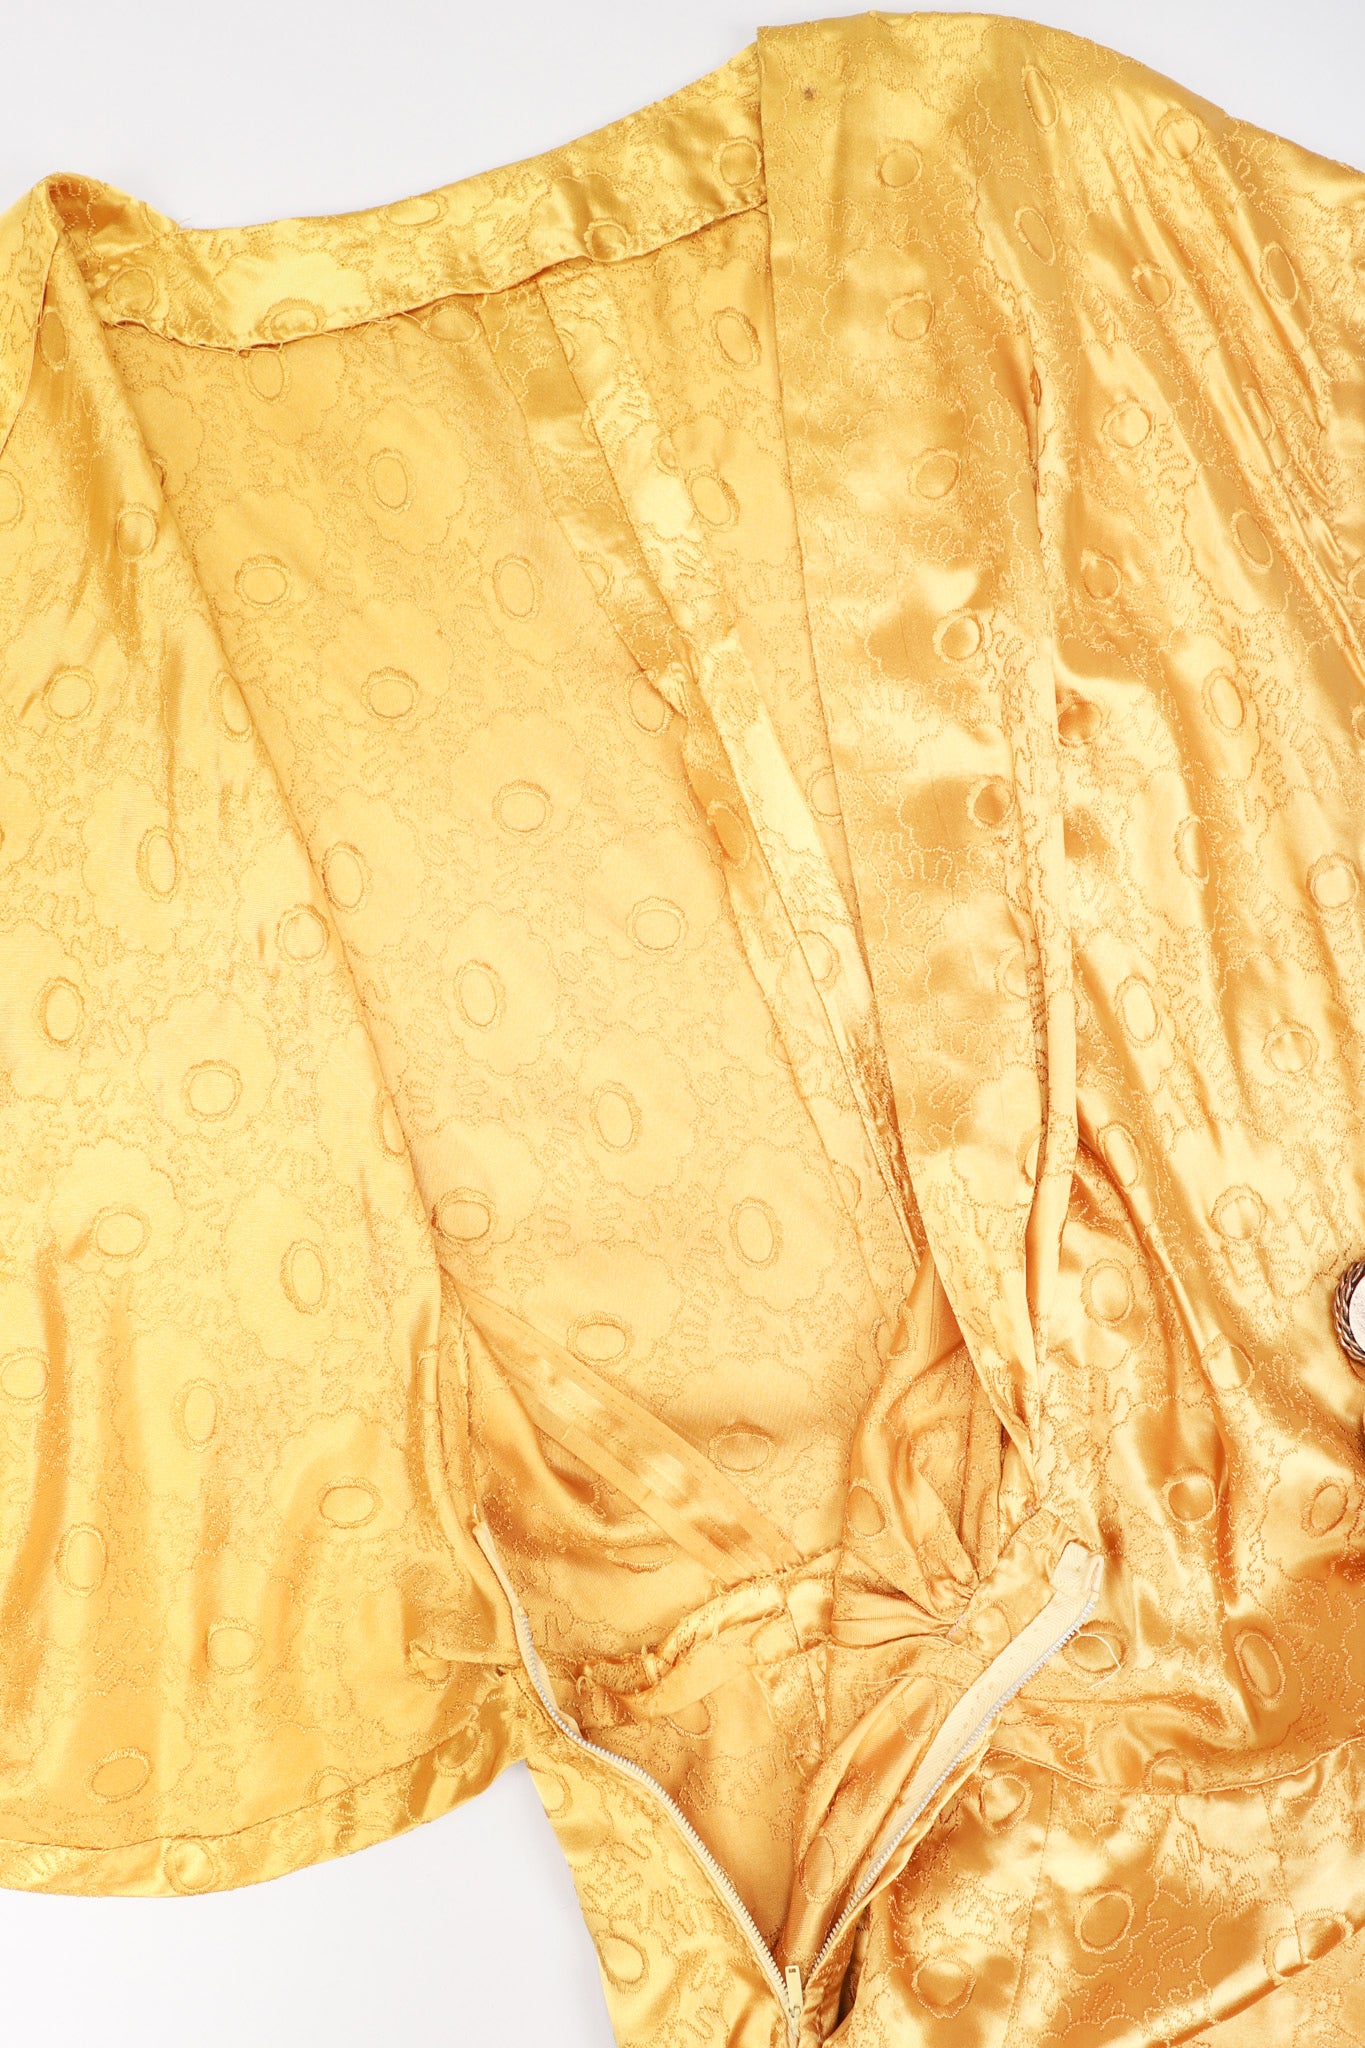 Recess Los Angeles Red Carpet Formal Event Golden Opium Poppy Satin Silk Gown Dress